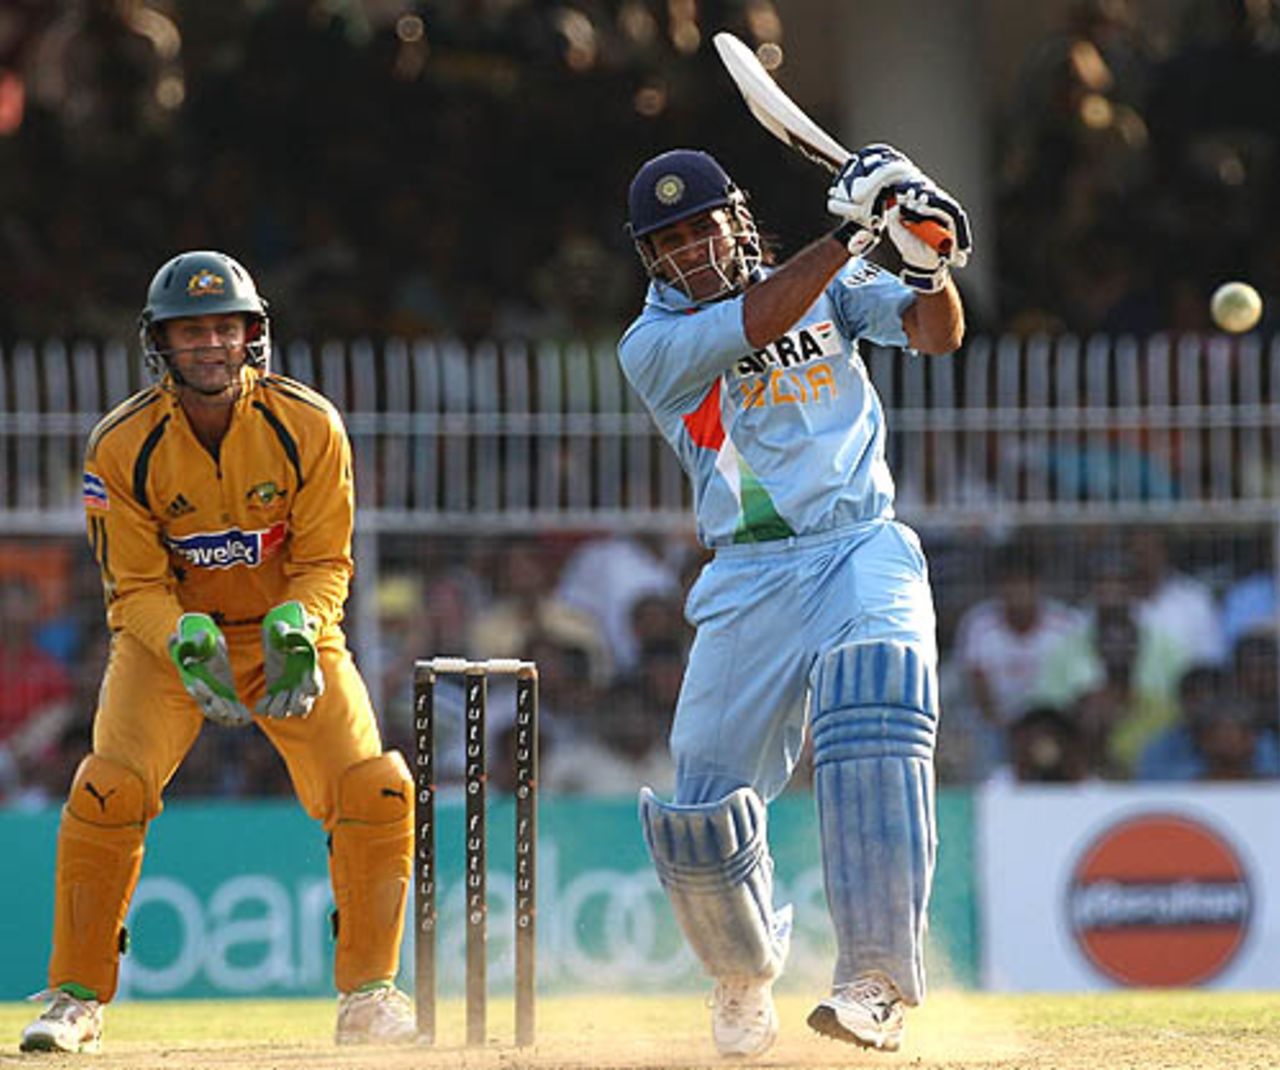 Mahendra Singh Dhoni blasts one straight while Adam Gilchrist looks on, India v Australia, 6th ODI, Nagpur, October 14, 2007   



